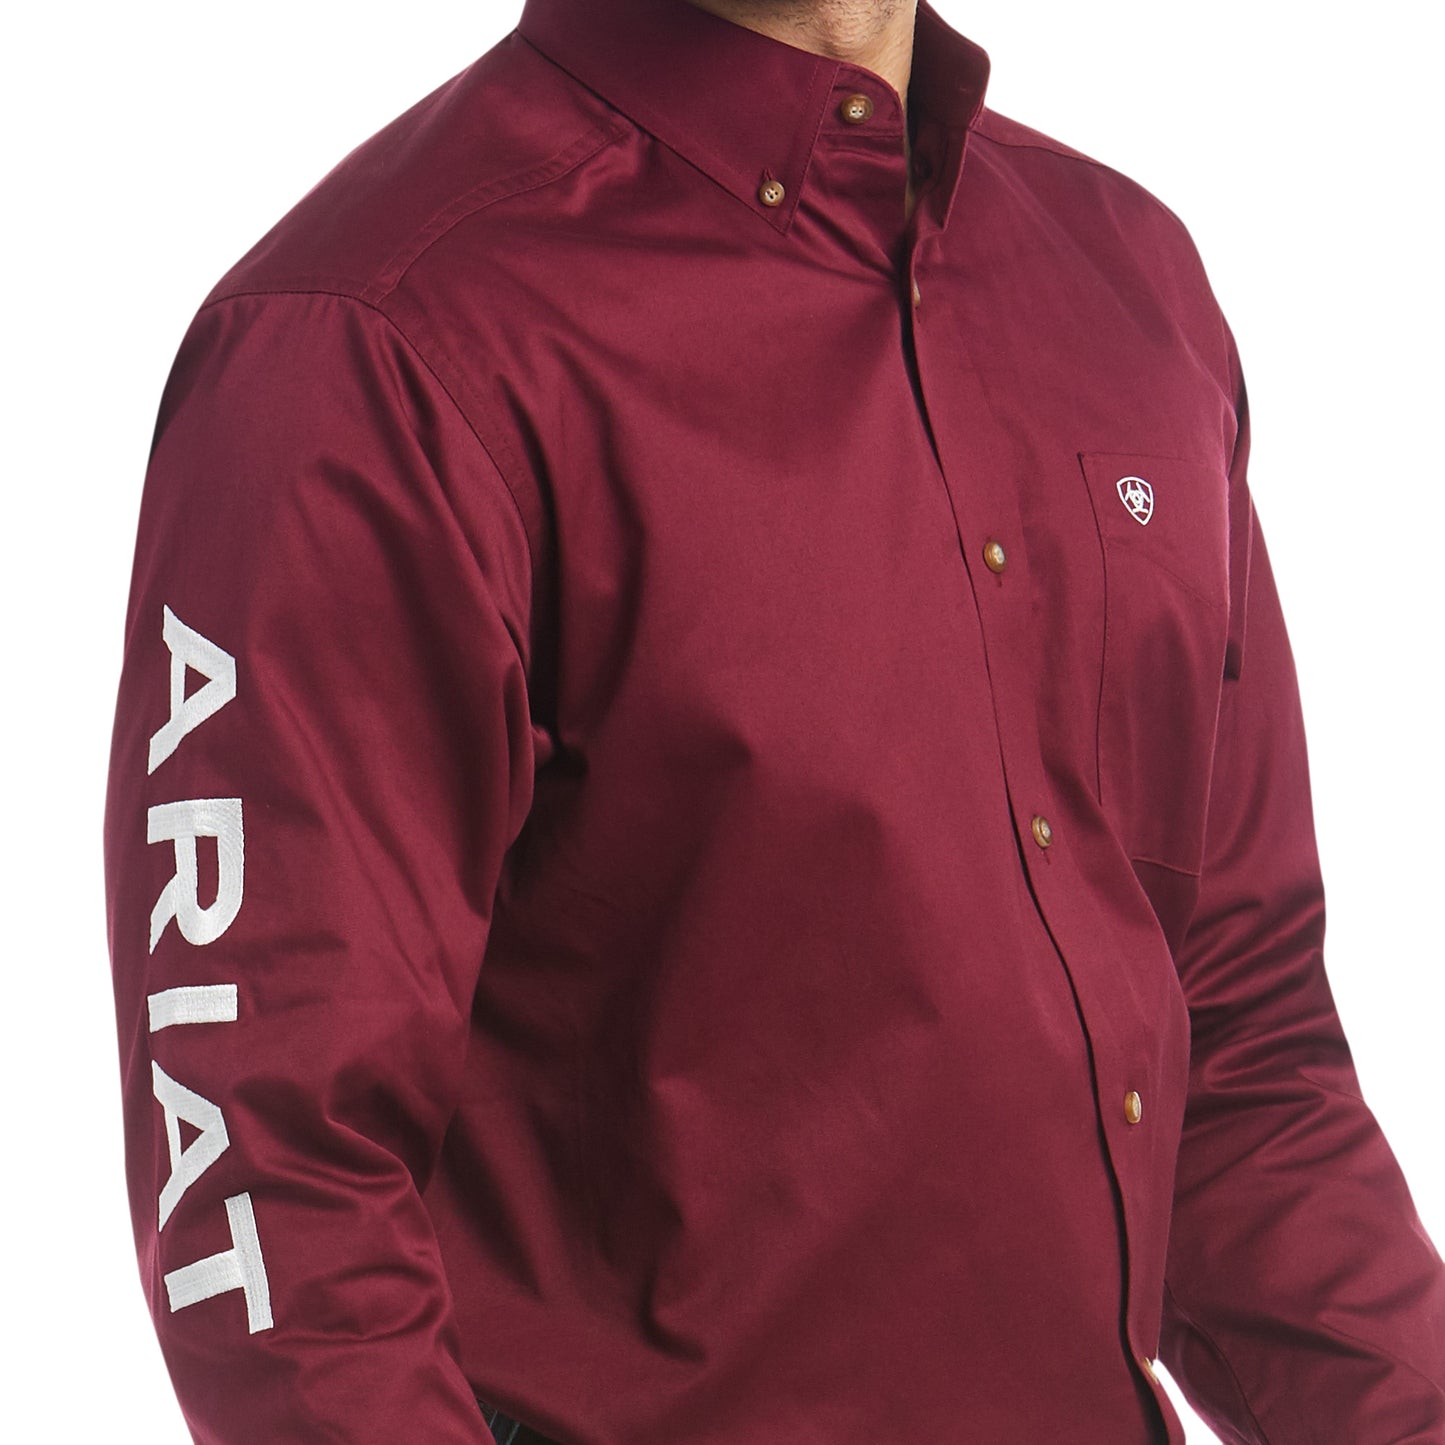 Ariat Team Logo Twill Classic Fit Shirt - Burgundy